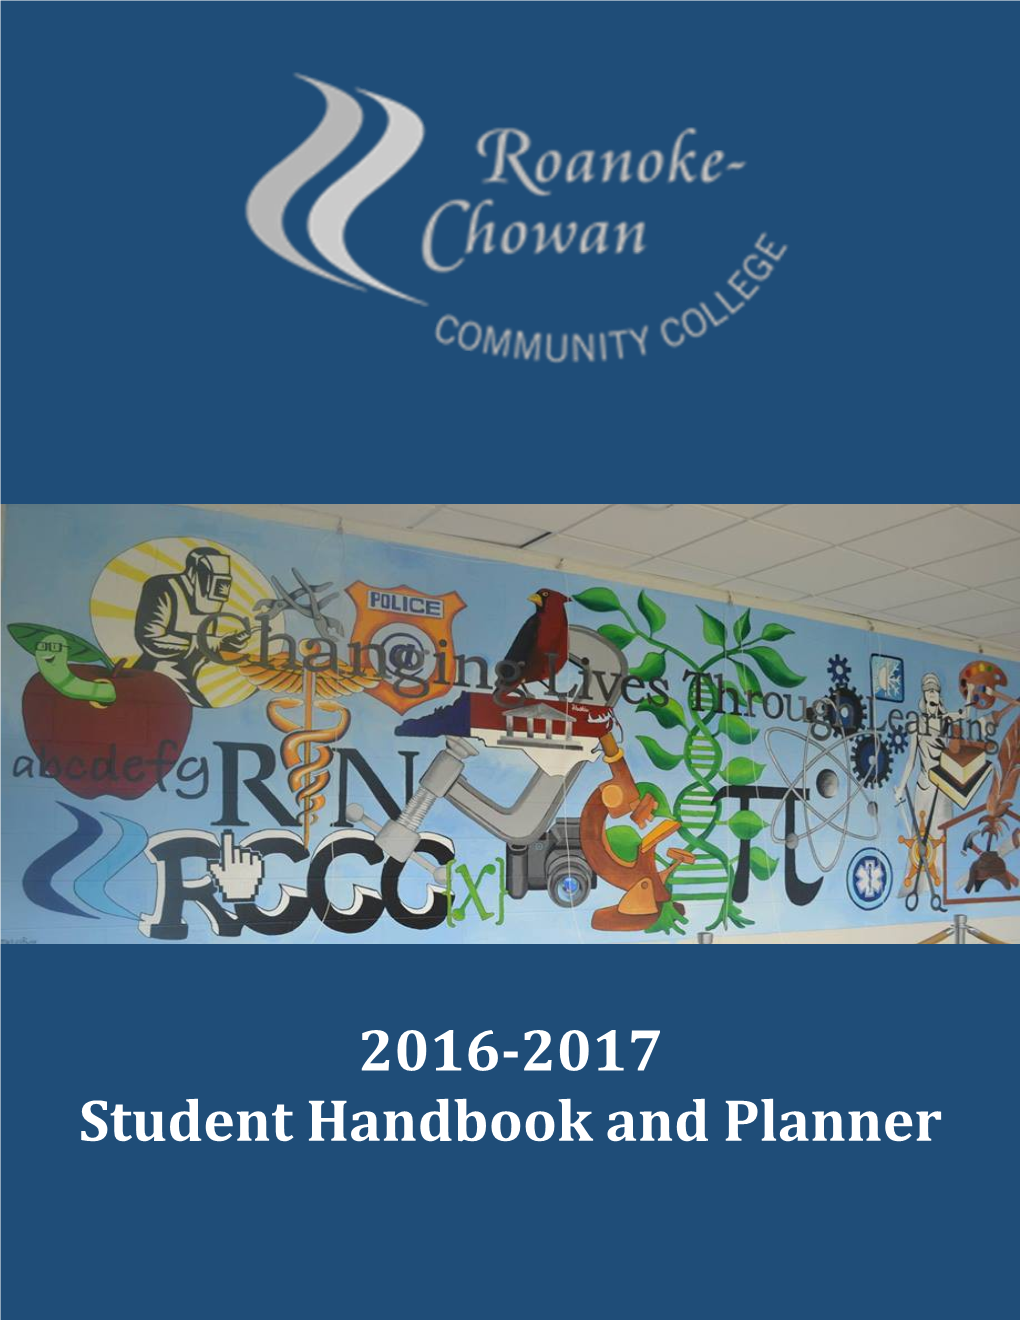 Student Handbook and Planner s1